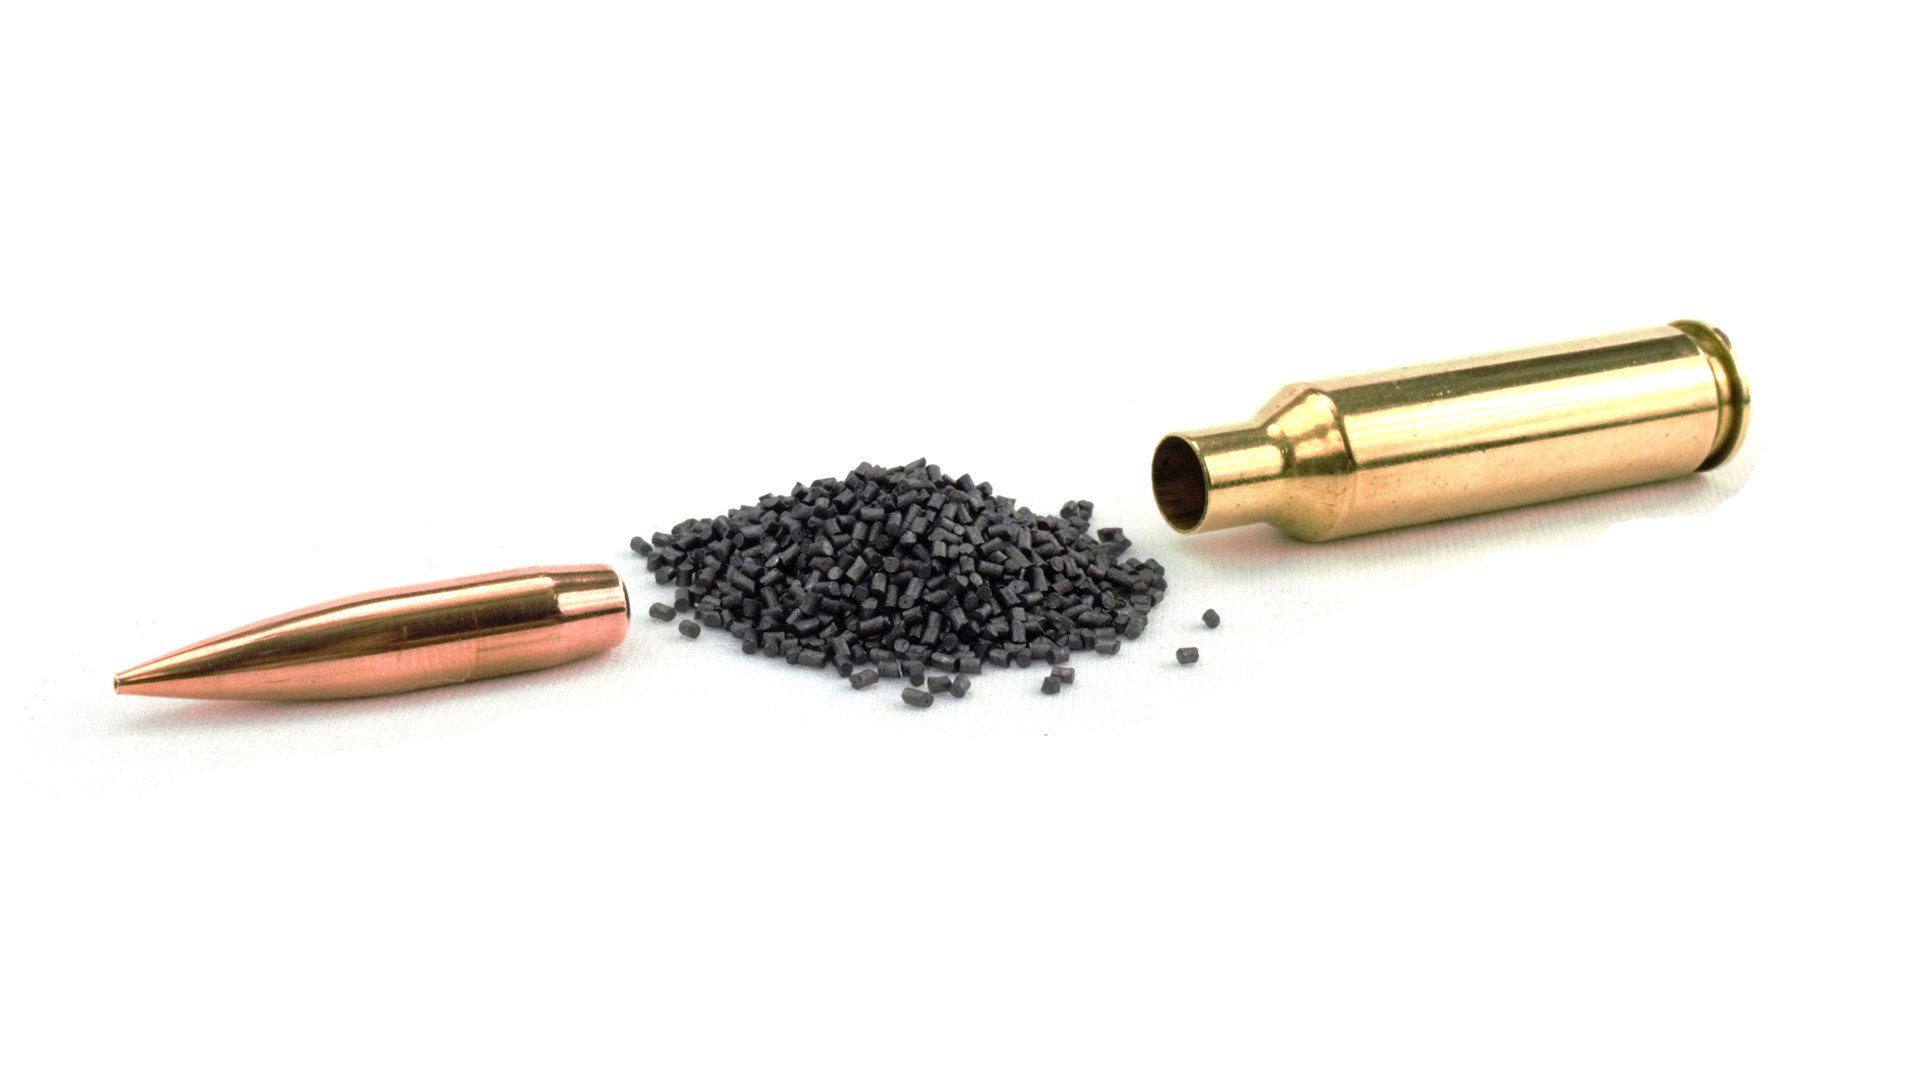 Federal Ammunition bullet powder cartridge case exploded view disassembled brass black powder guns hunting shooting parts